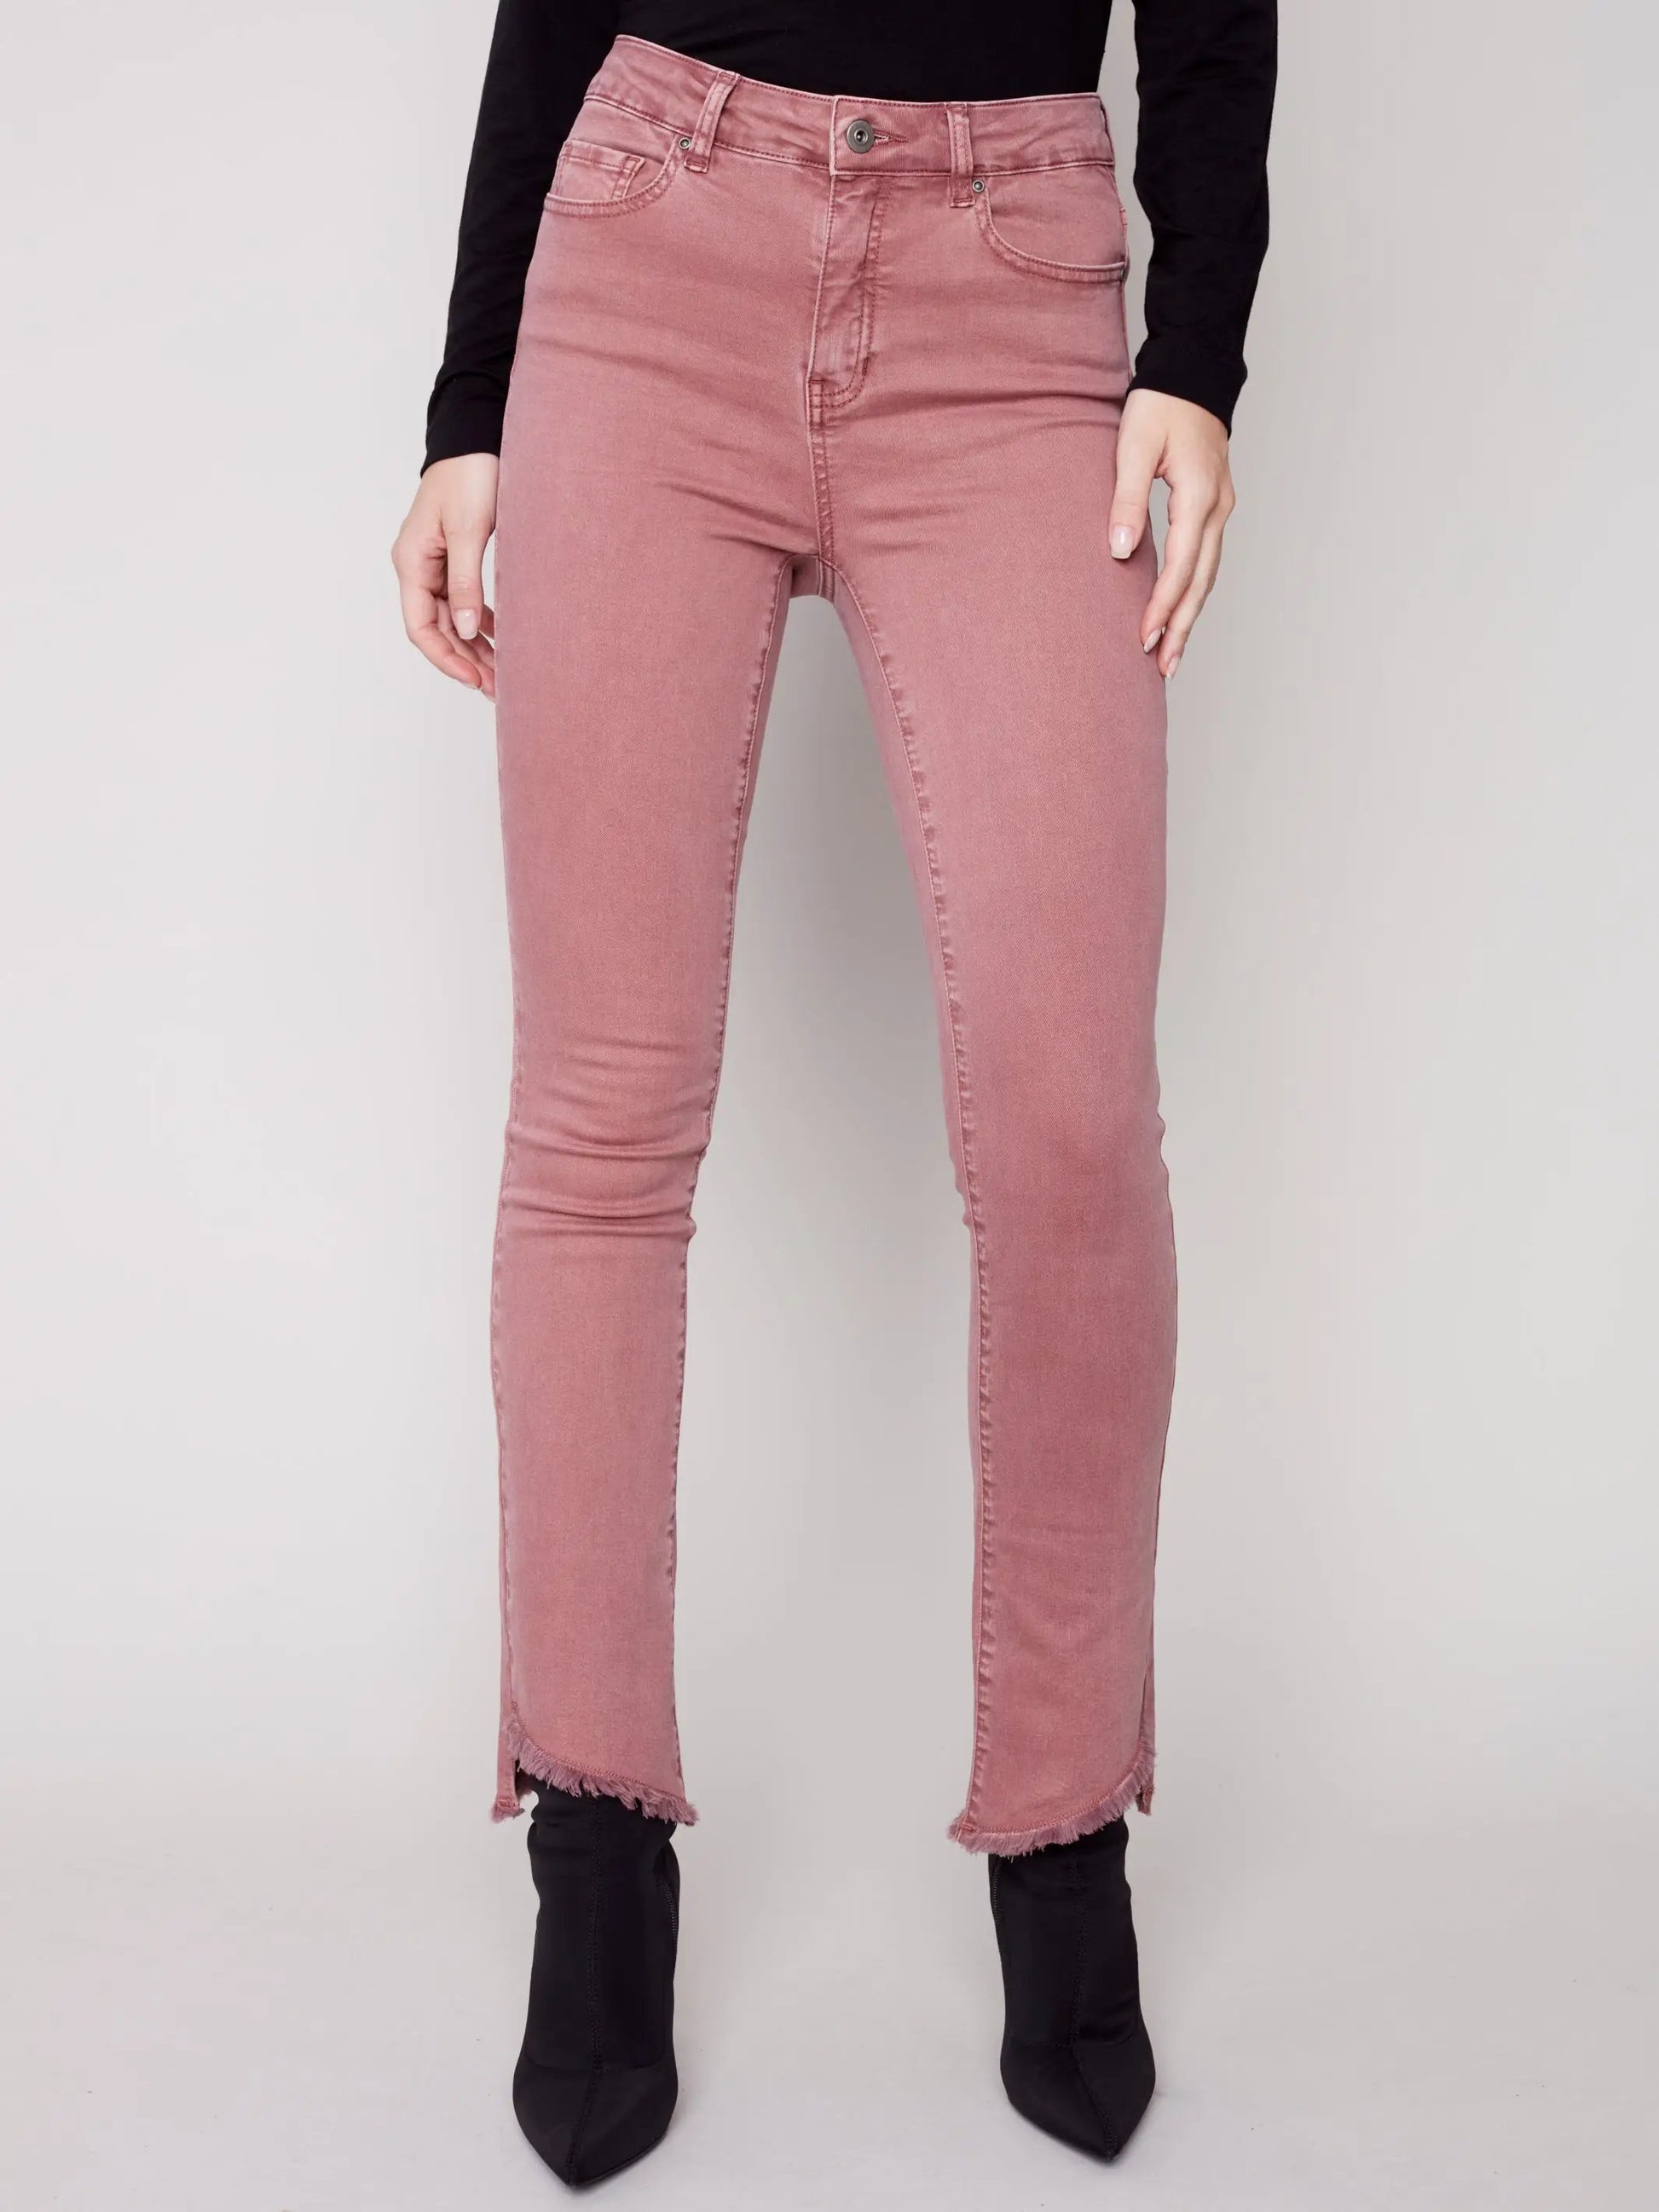 ZIZOCWA Asymmetrical Jeans For Women Boot Cut Pants For Women